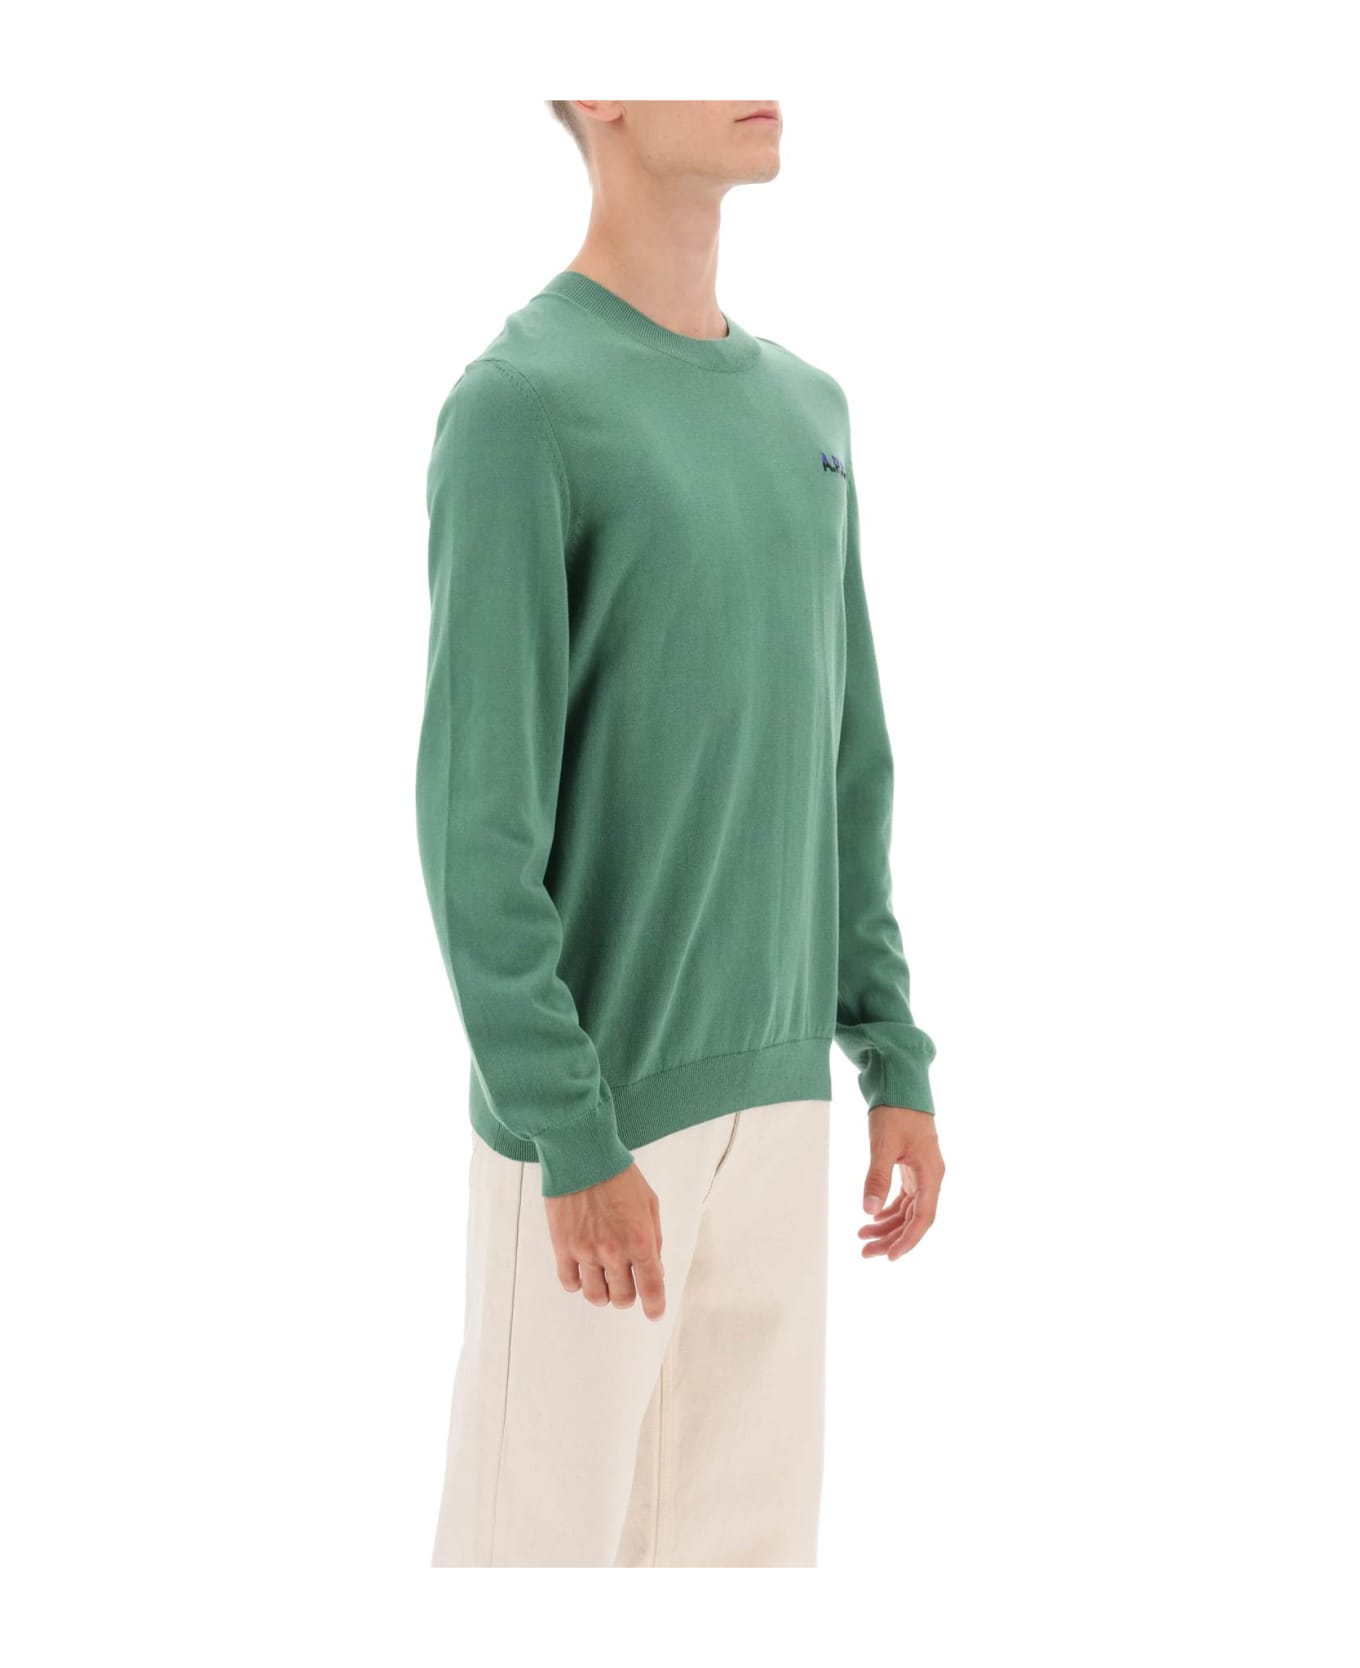 A.P.C. Cotton Crewneck Sweater - VERT MARINE (Green)